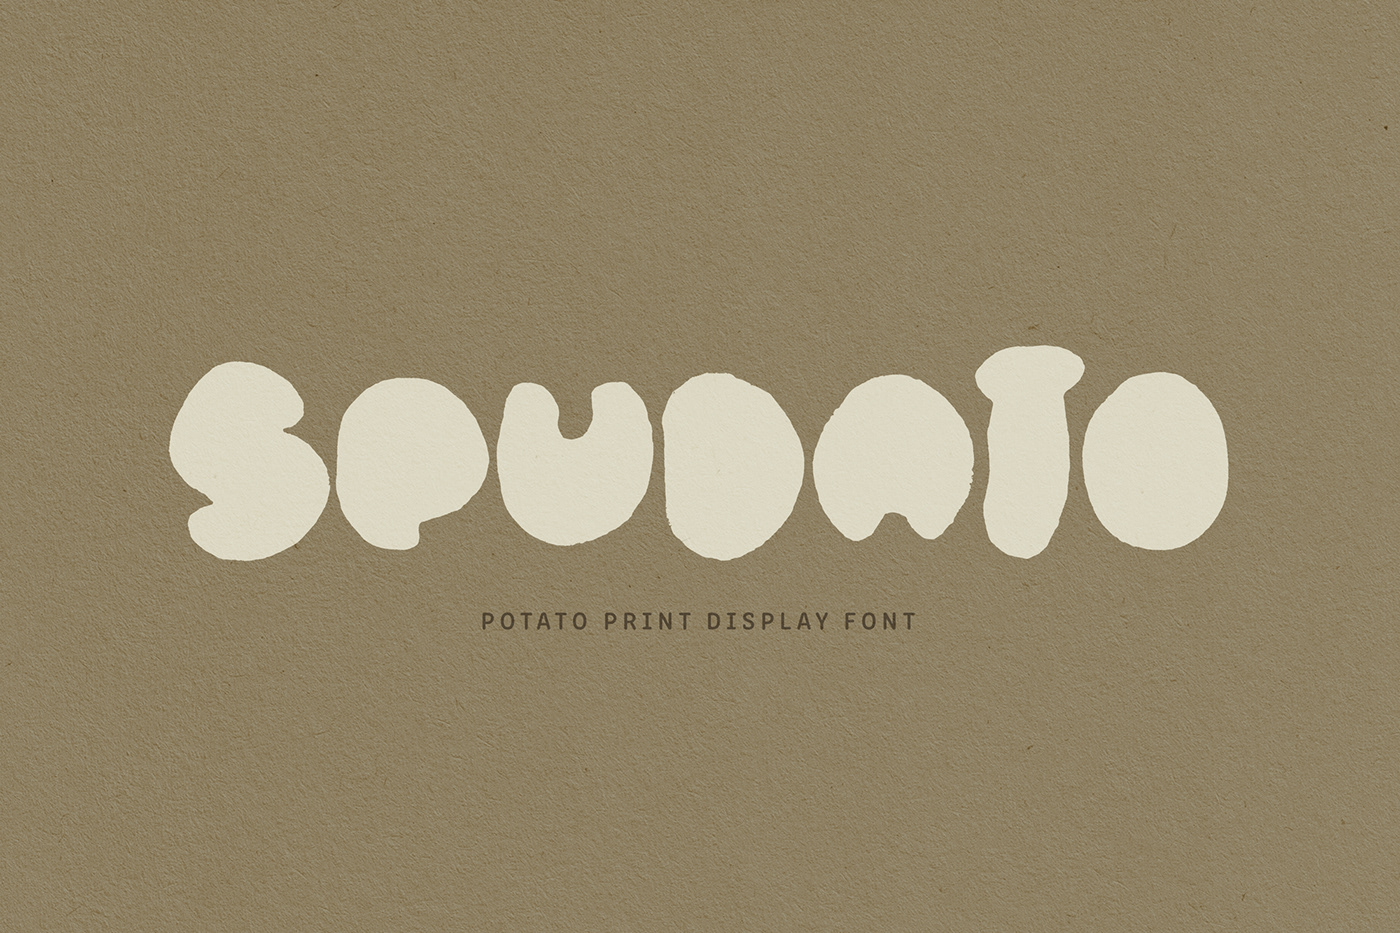 Spudato font designed by Deborah Ranzetta